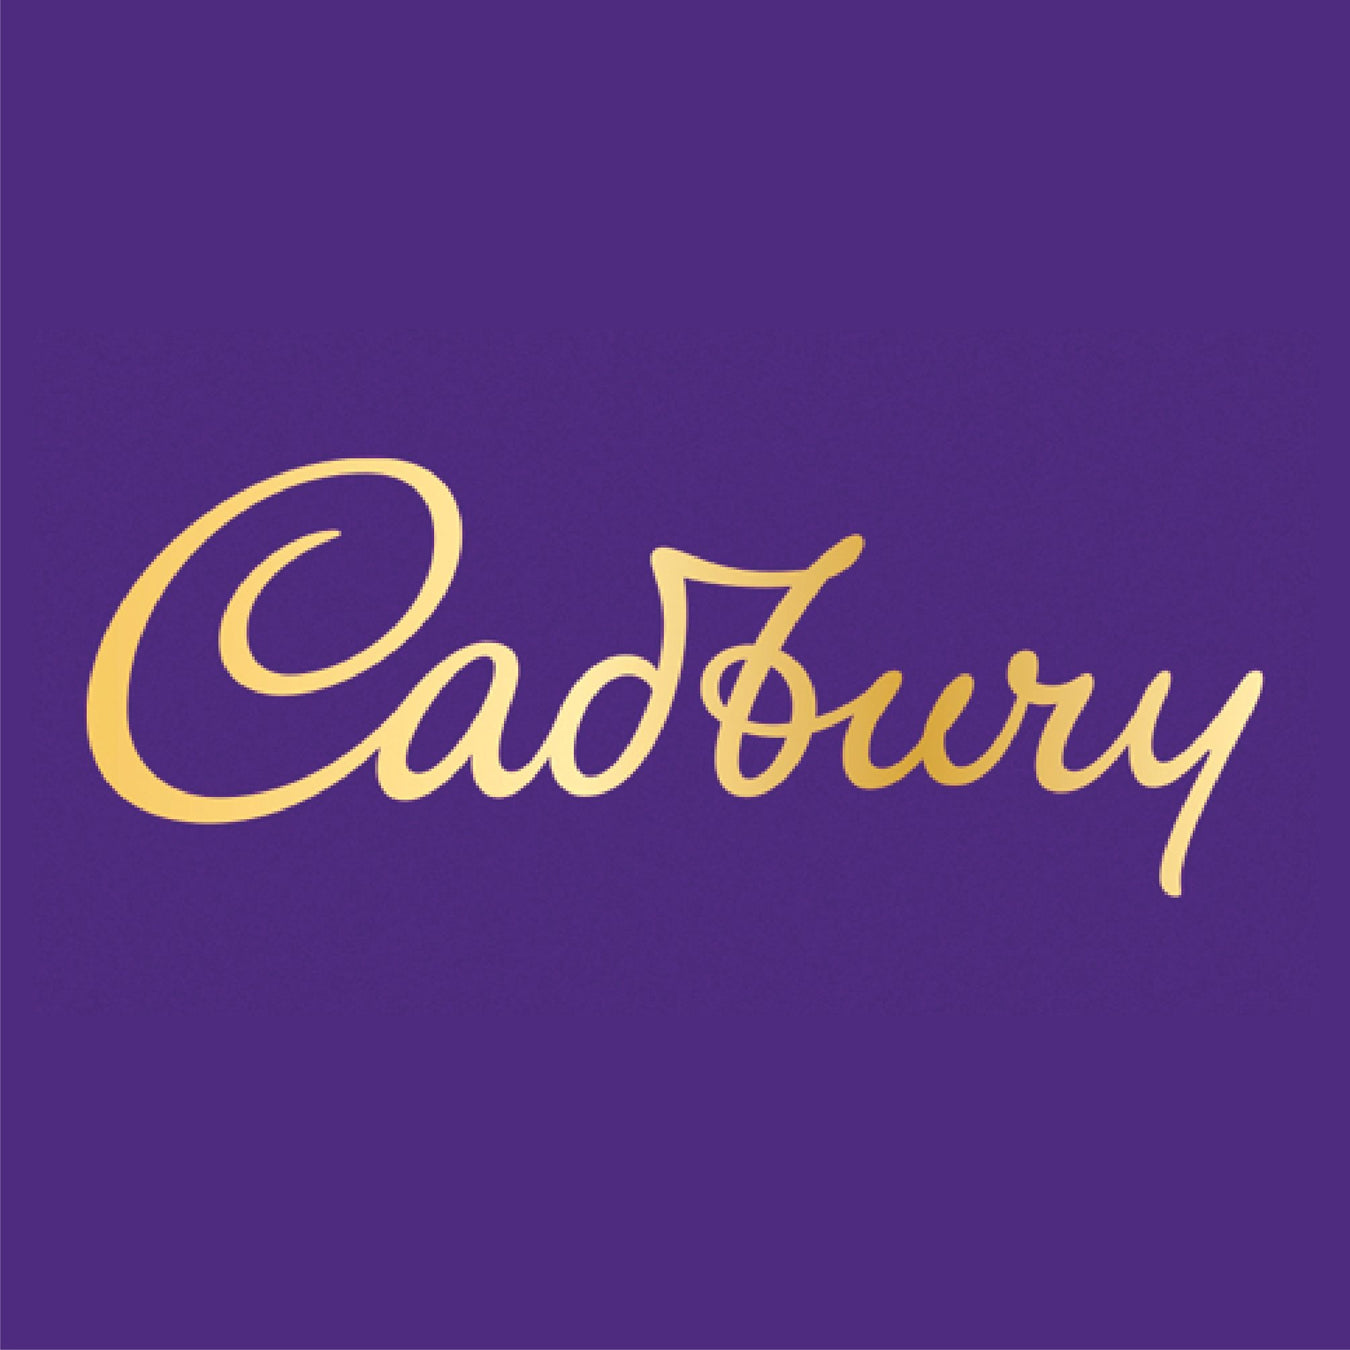 Cadbury - The Great British Shop